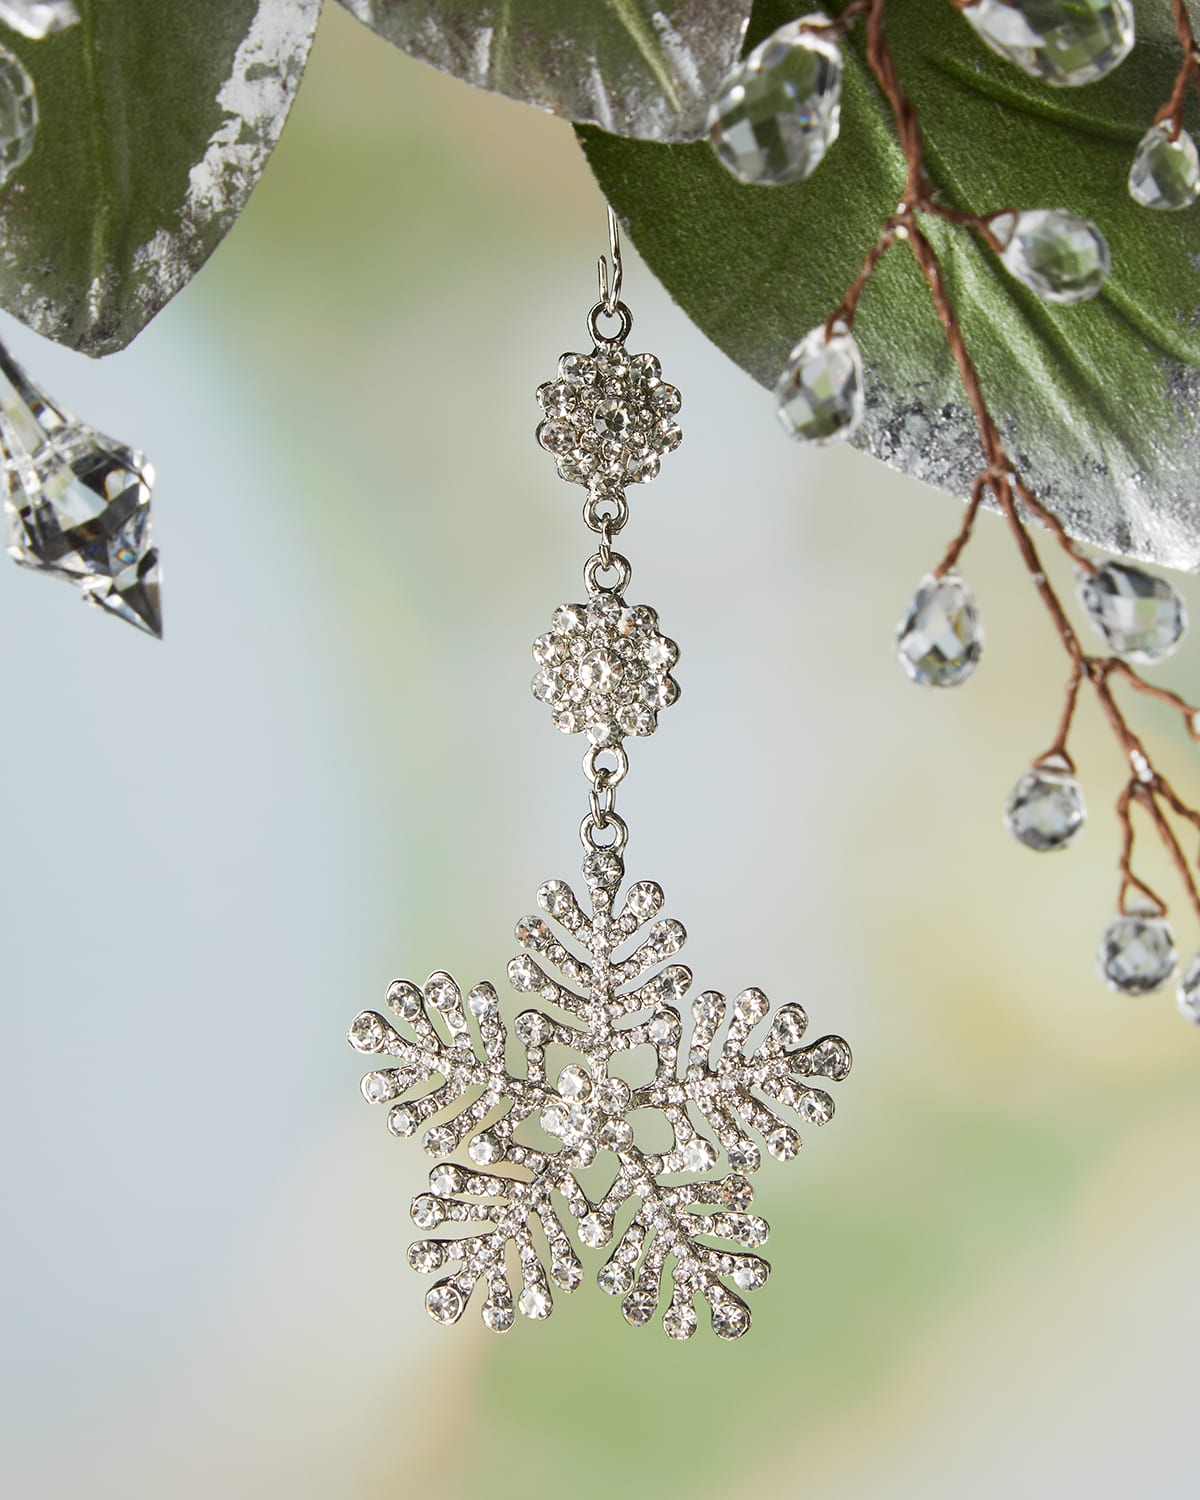 Snowflake Ornament, 2.5"